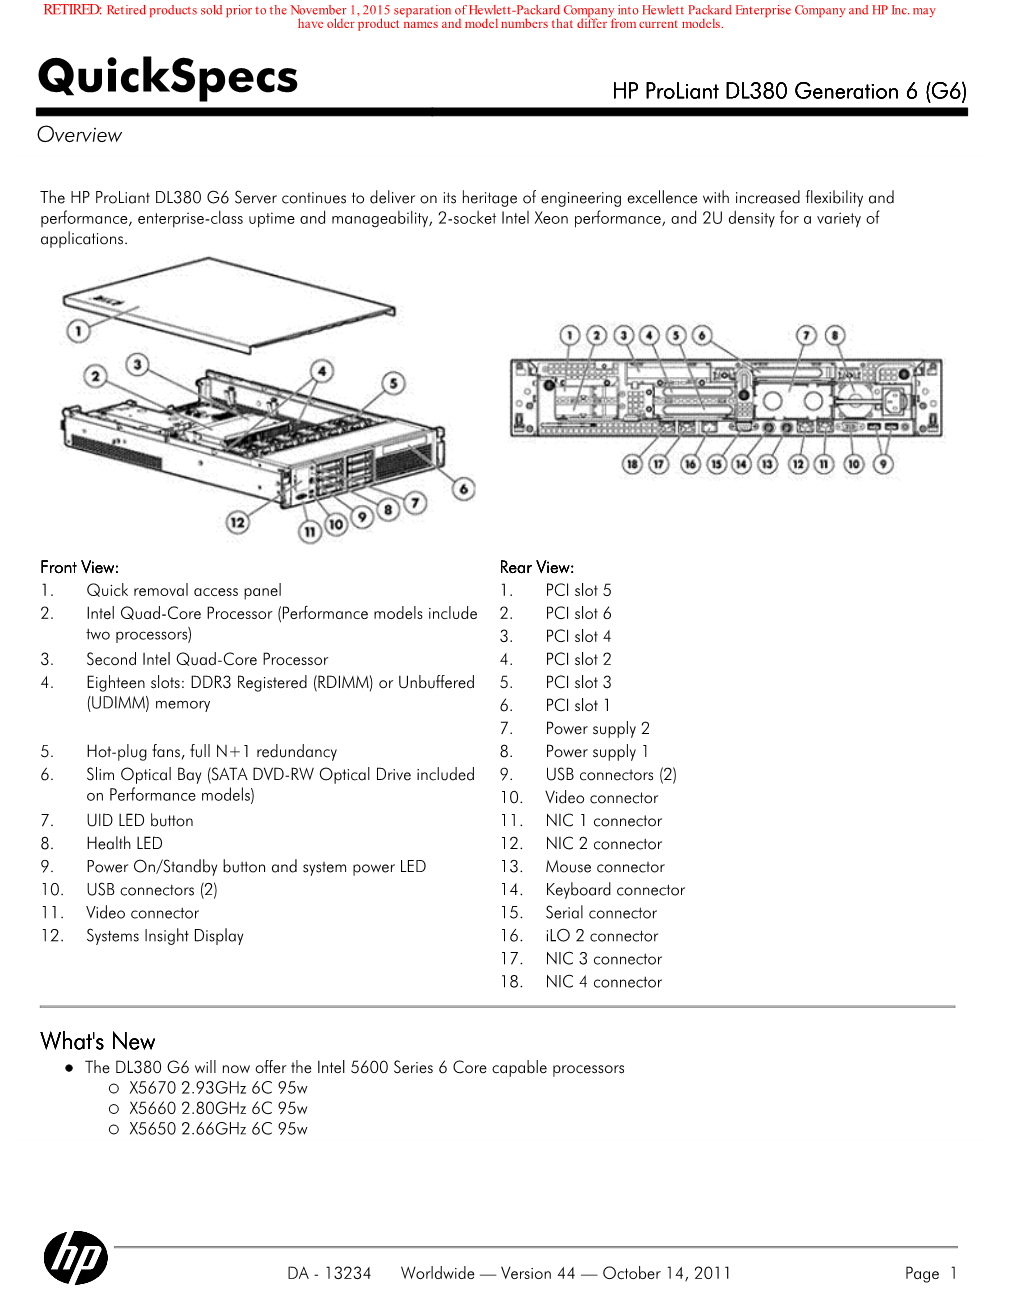 Quickspecs HP Proliant DL380 Generation 6 (G6) Overview